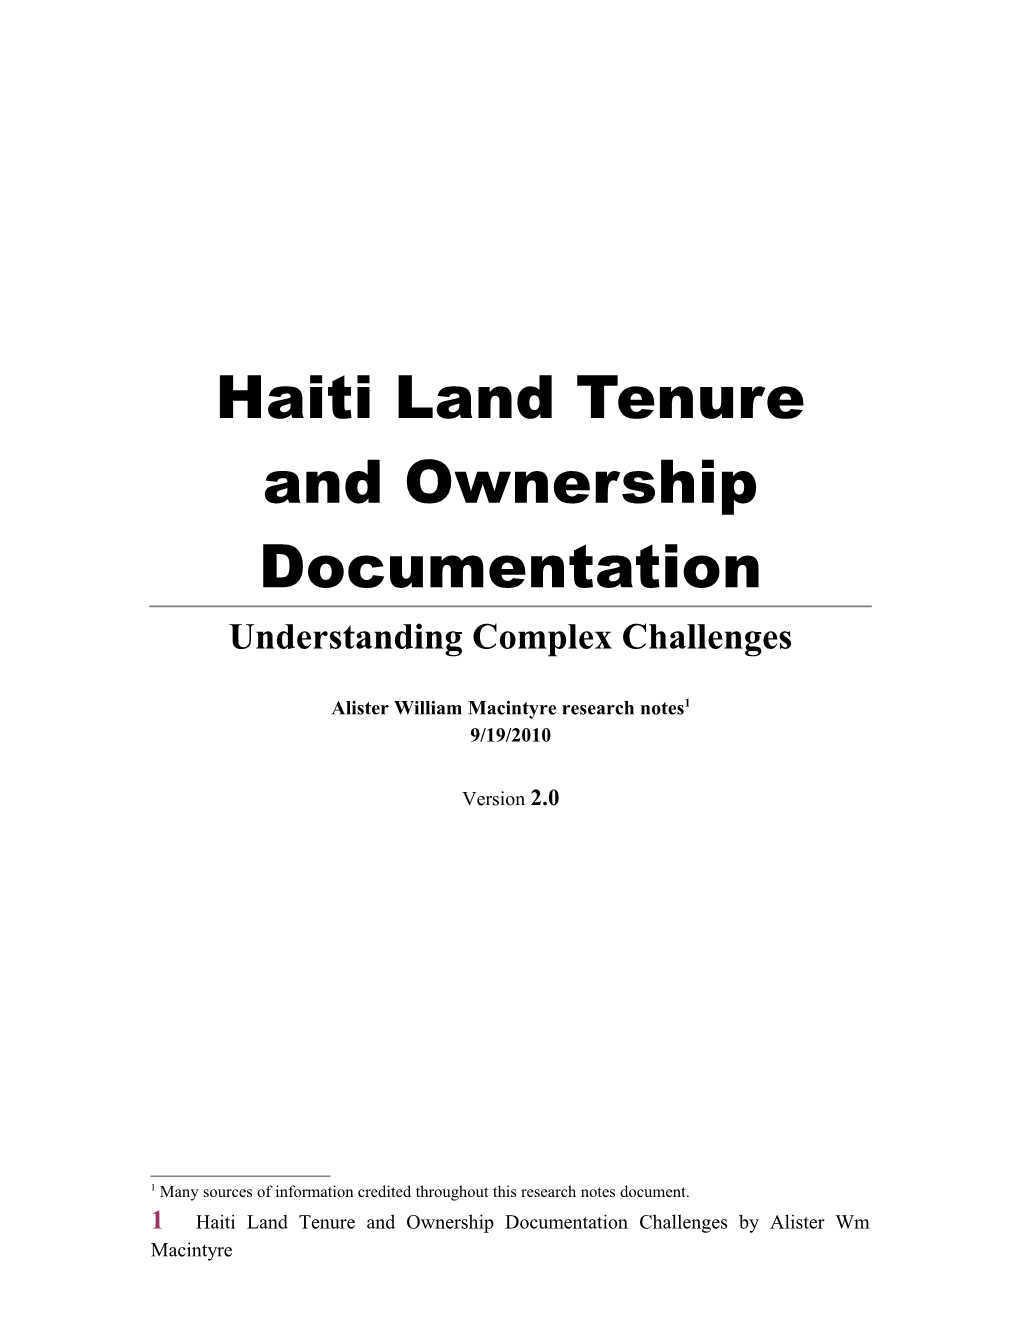 Haiti Political History s2